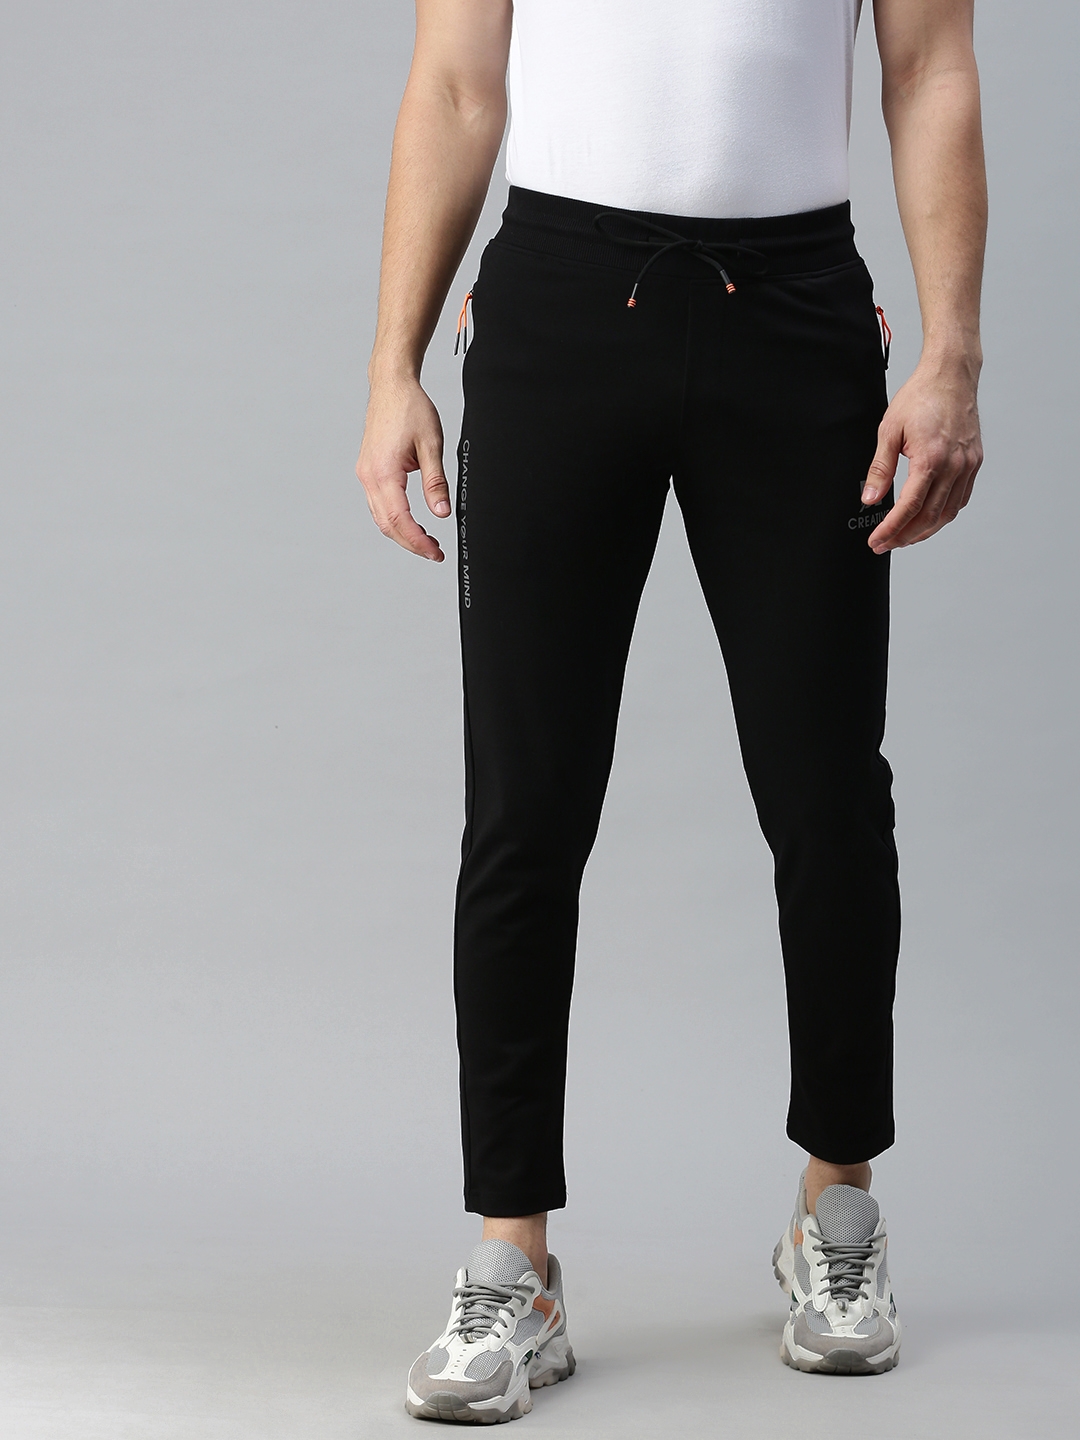 Men's Black Cotton Solid Trackpants